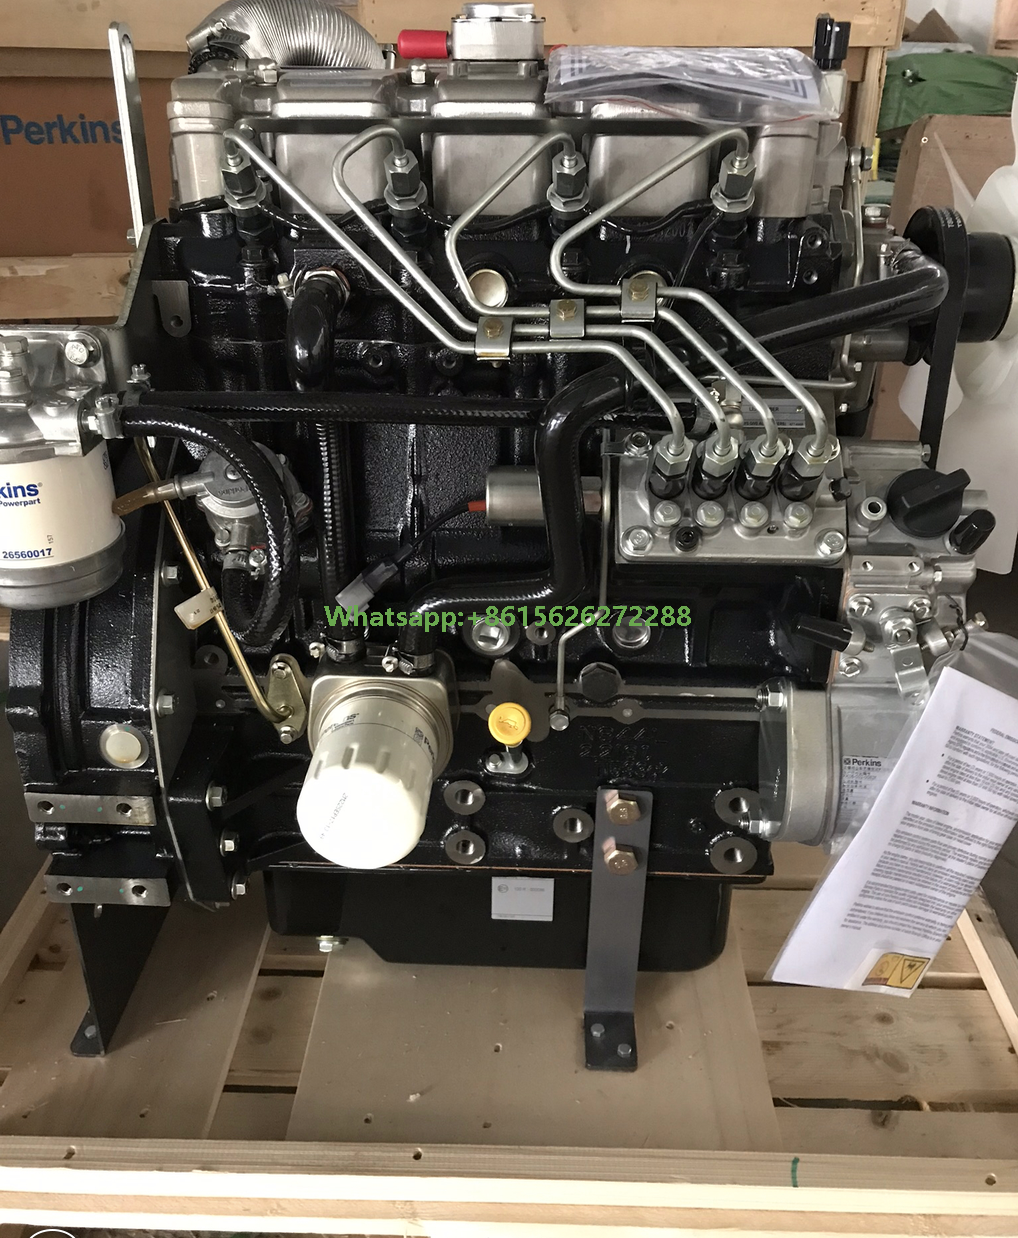 400 Series Perkins Engine 404D-22T IOPU 44.7 kW / 59.9 hp 